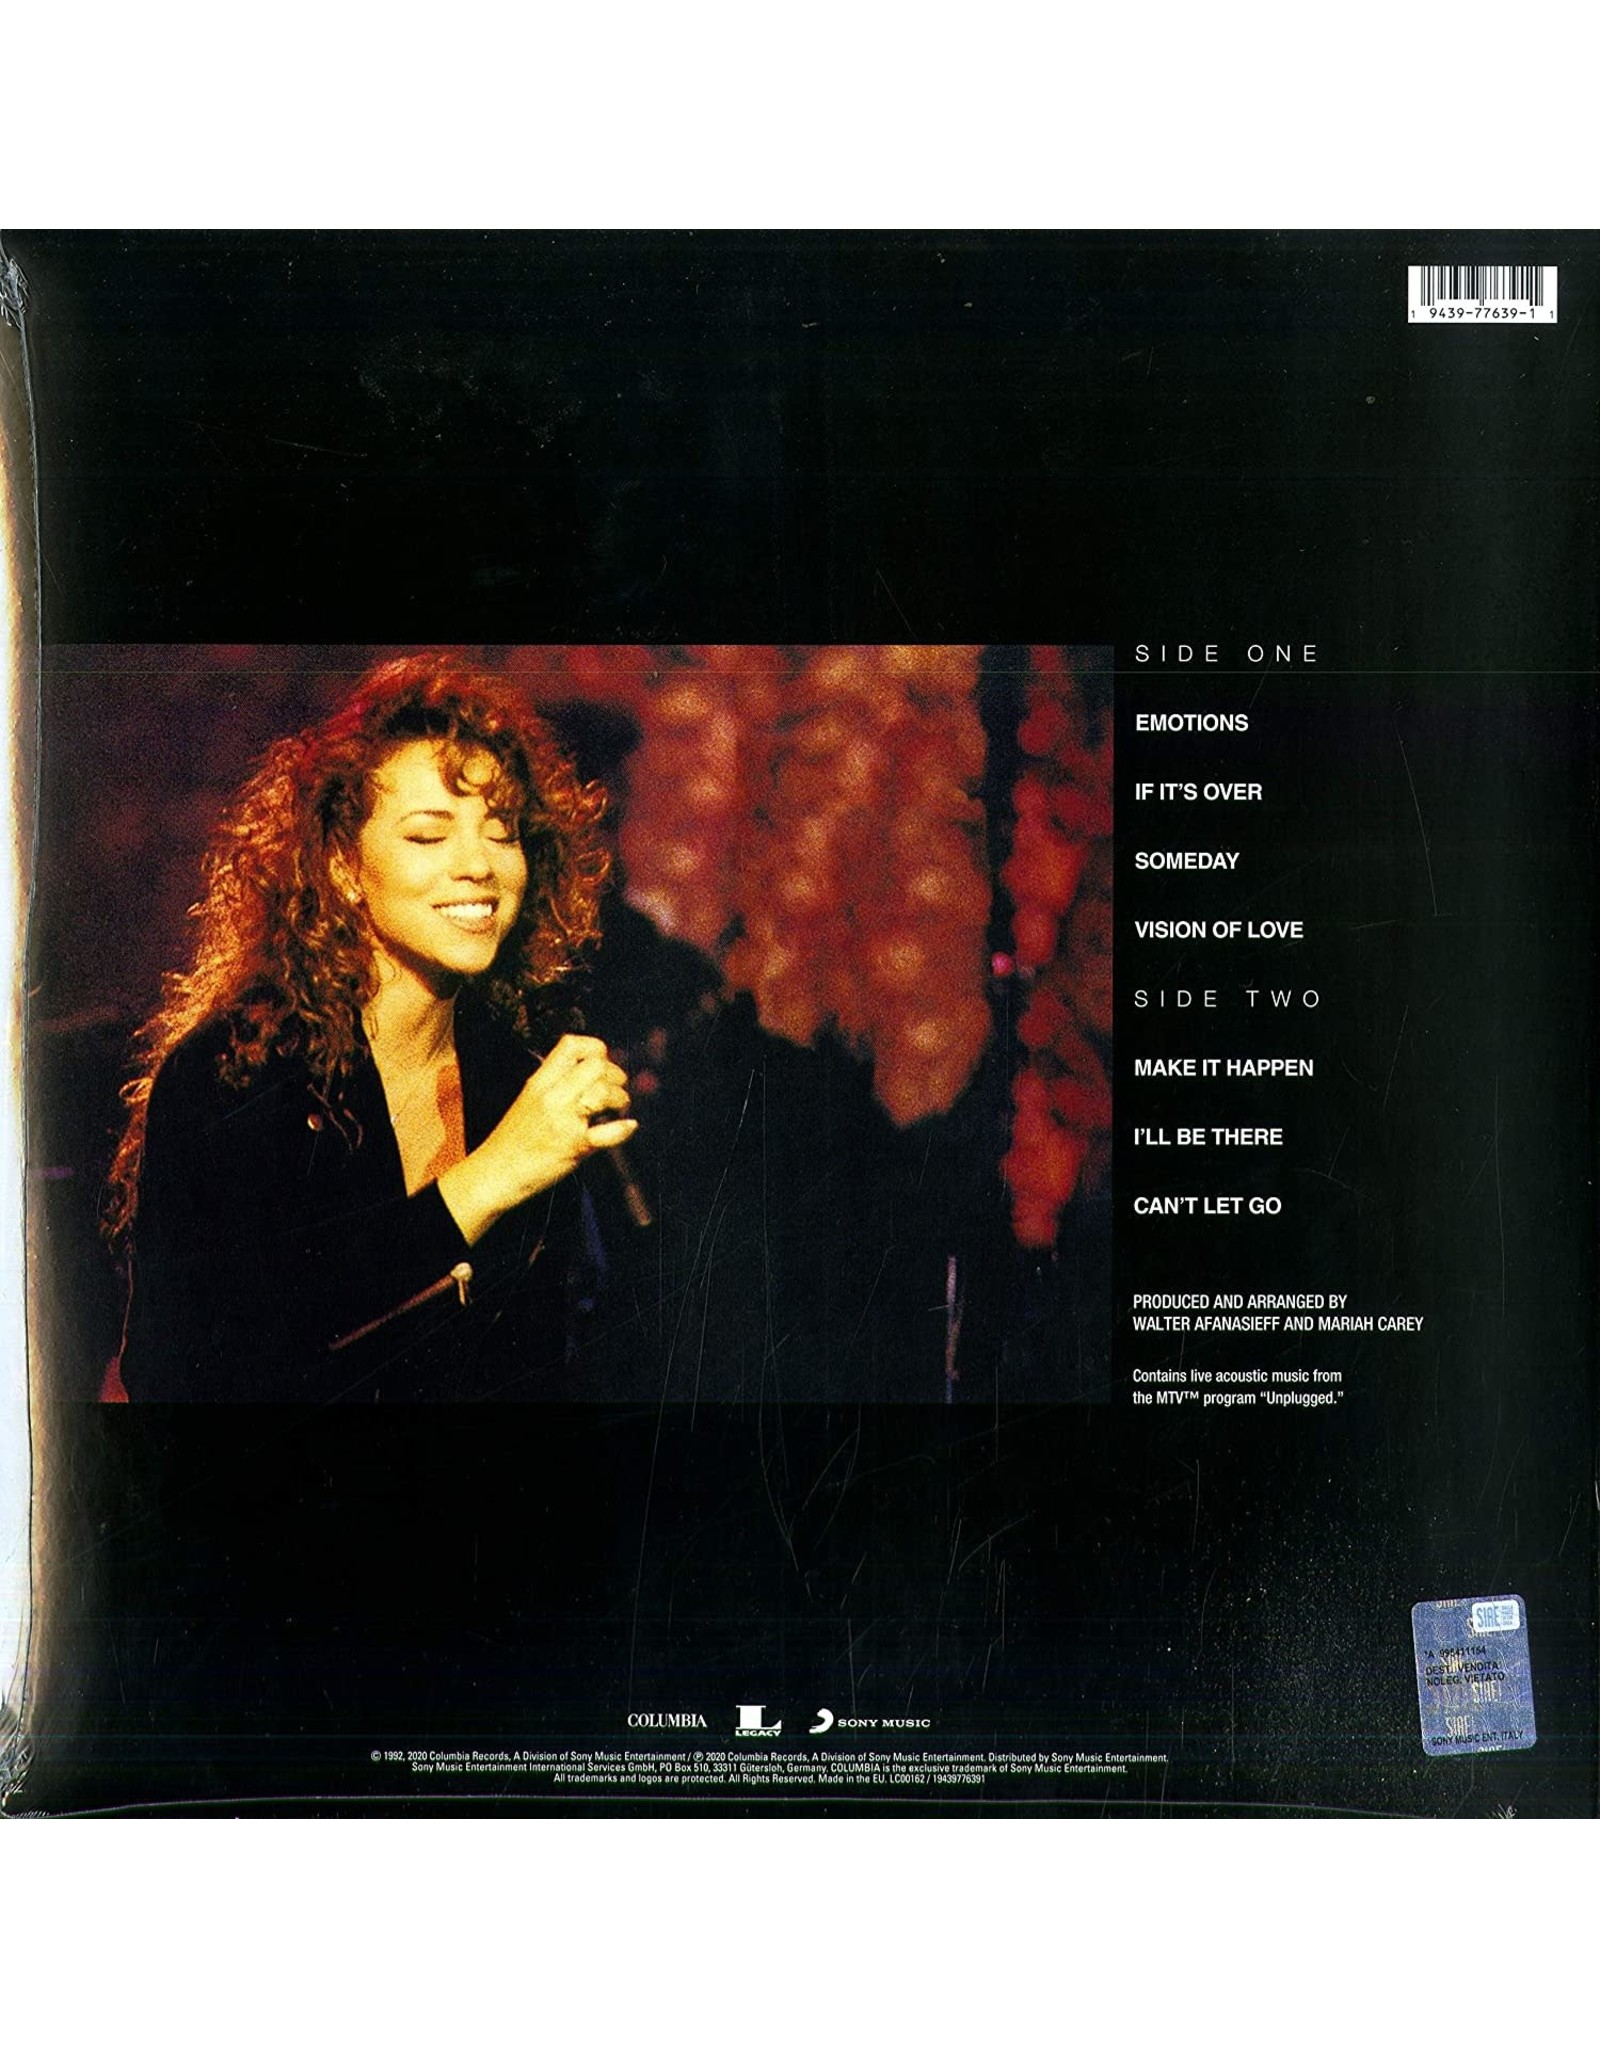 Mariah Carey - MTV Unplugged